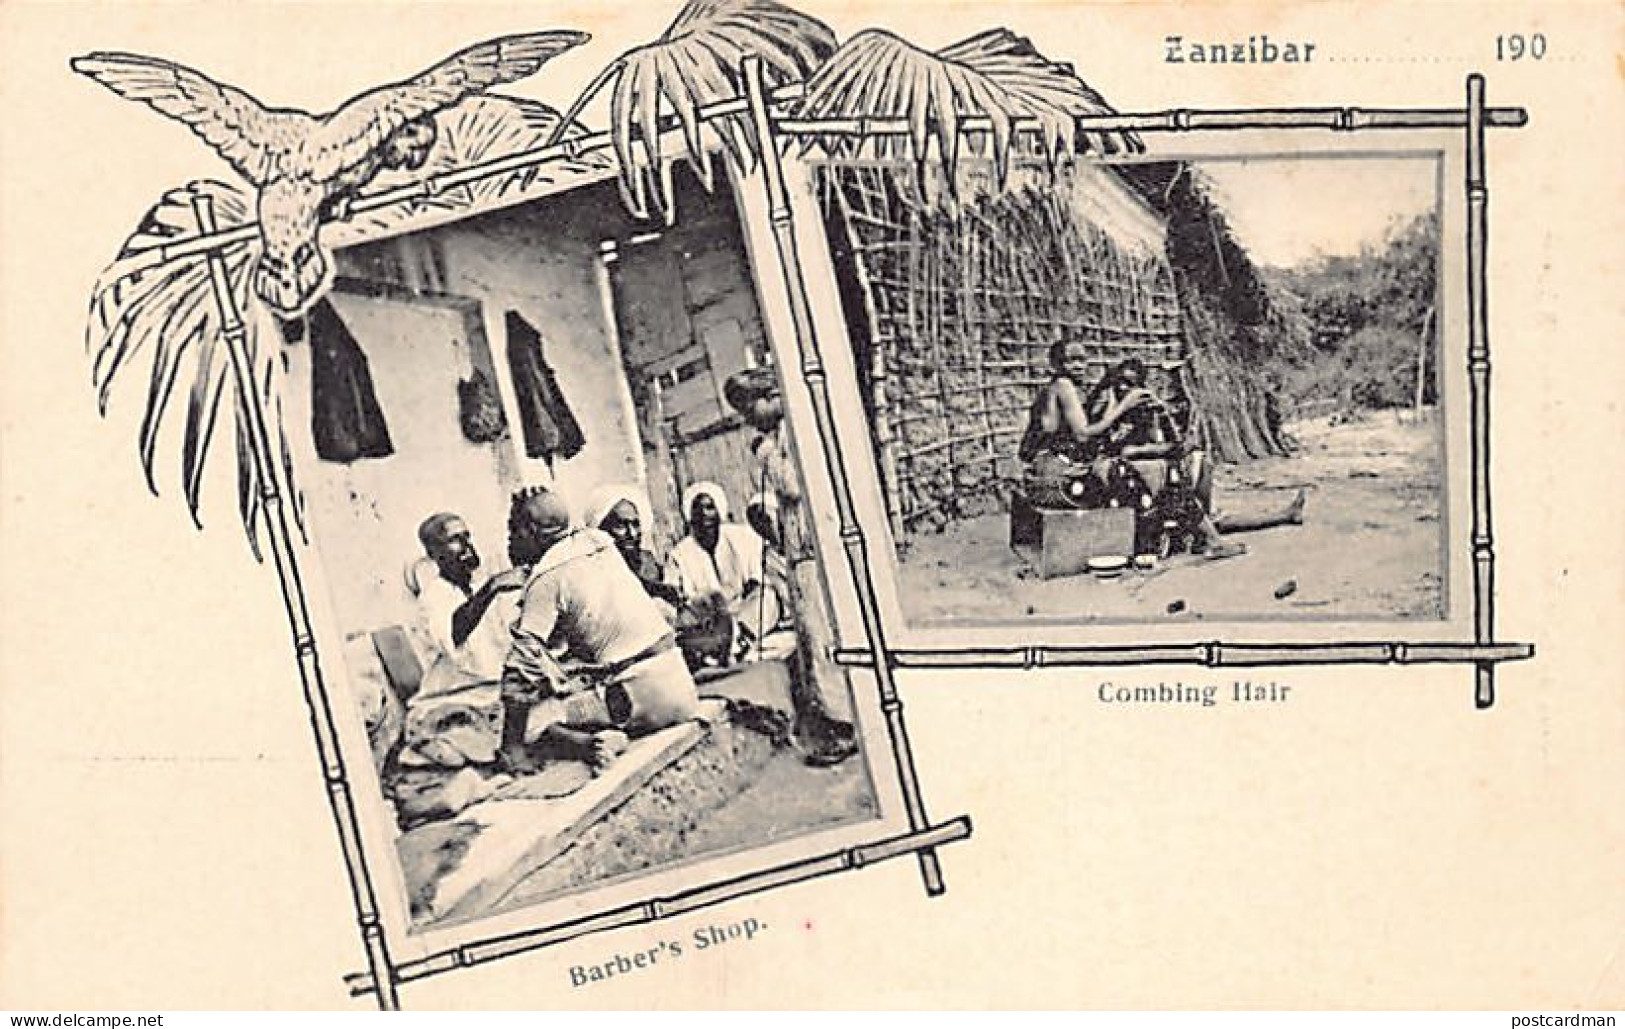 Tanzania - ZANZIBAR - Barber's Shop - Combing Hair - Publ. Pereira De Lord Brothers 25 - Tanzania